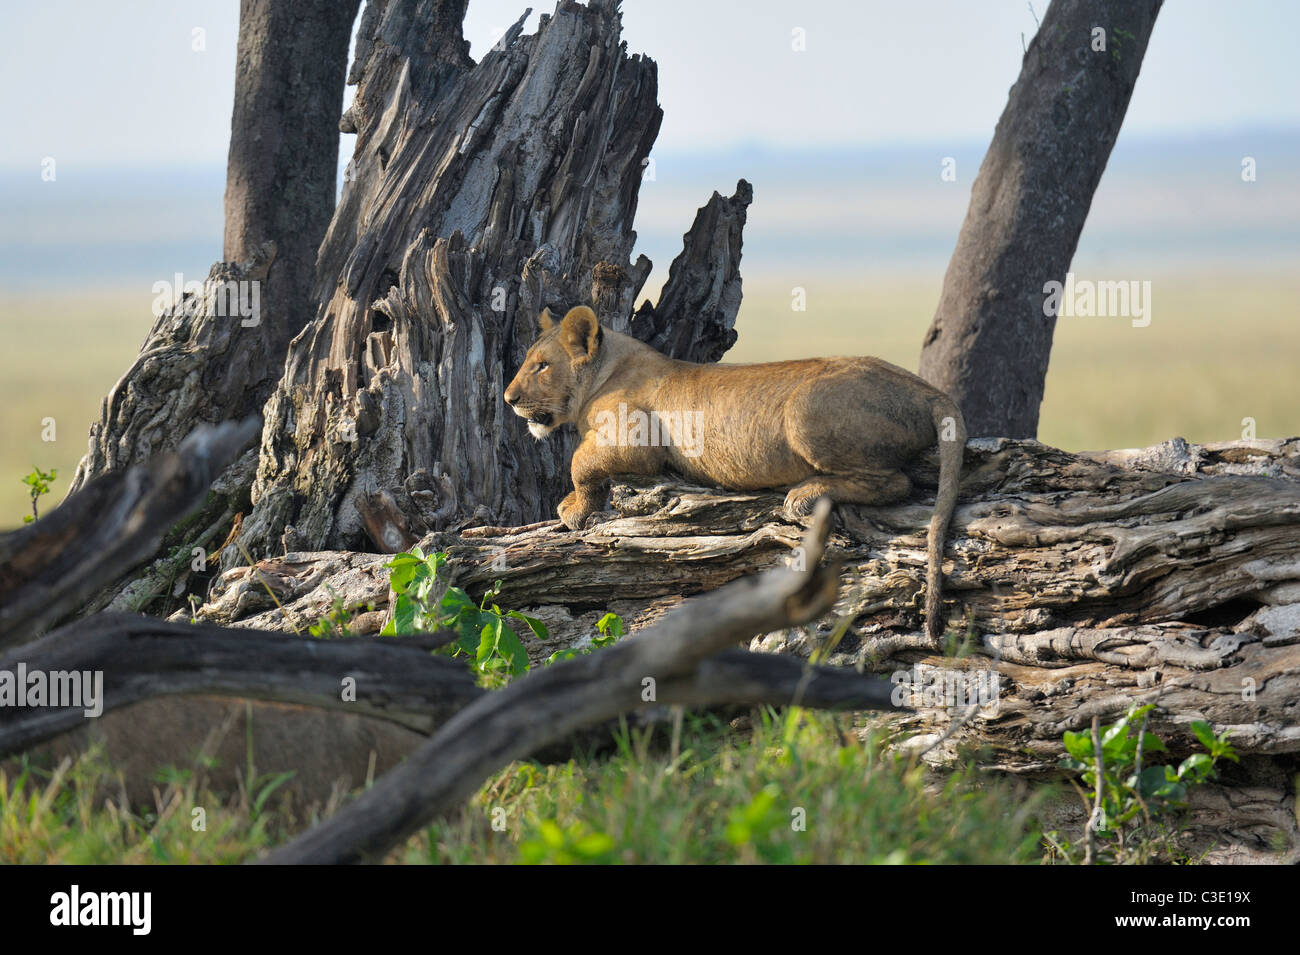 The Marsh pride of lions in their habitat in the Masai Mara, Kenya, Africa Stock Photo